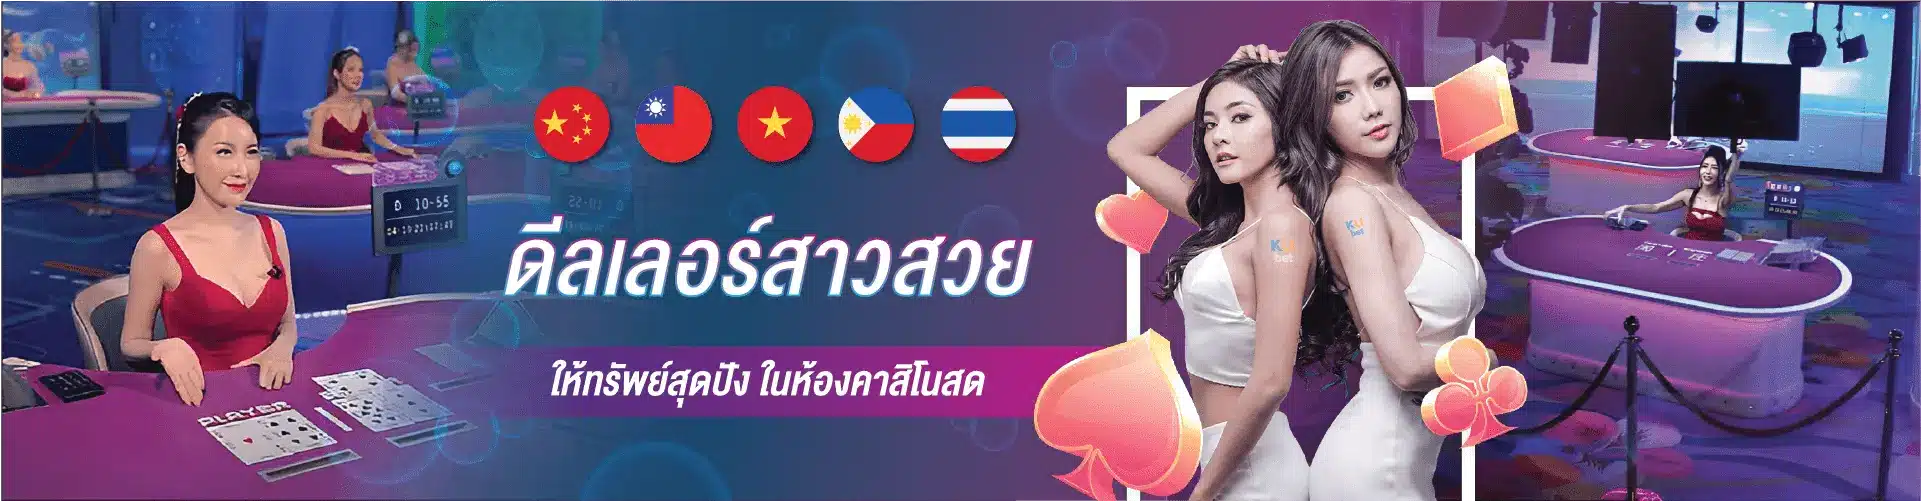 Hot MC Dealer KUBET Thailand - Online Casino